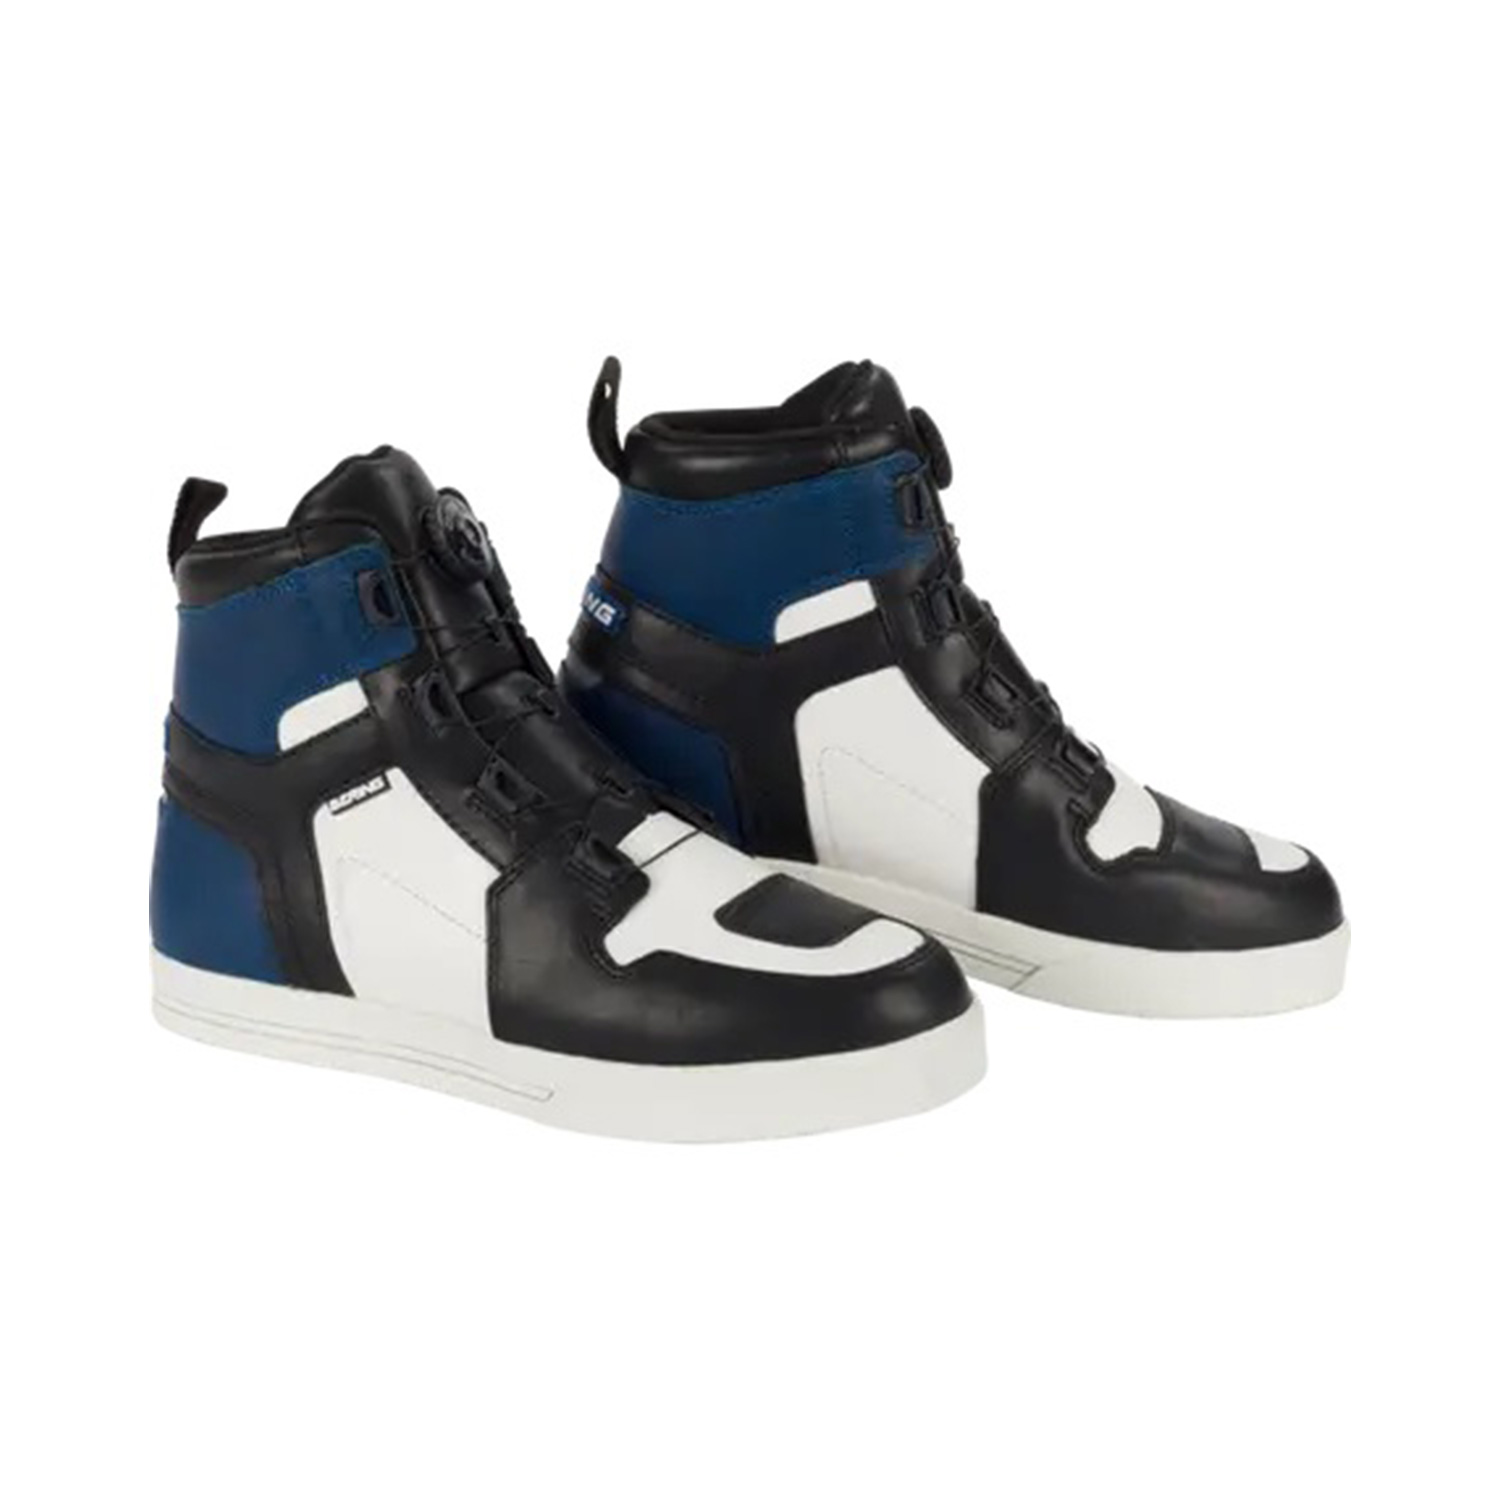 Bering Sneakers Reflex A-Top Black White Blue 40